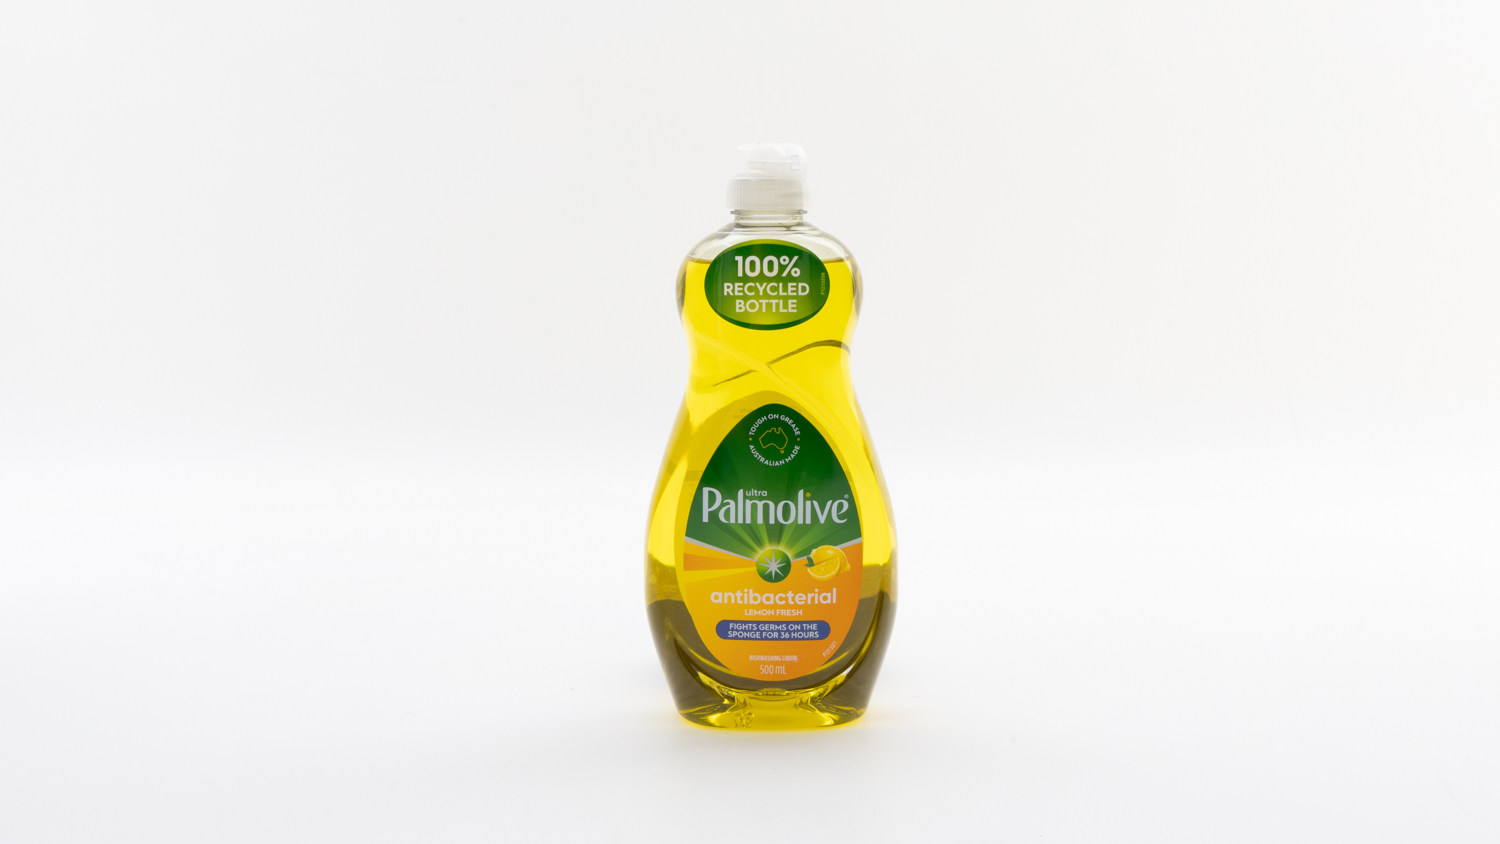 Palmolive Ultra Antibacterial Dishwashing Liquid carousel image